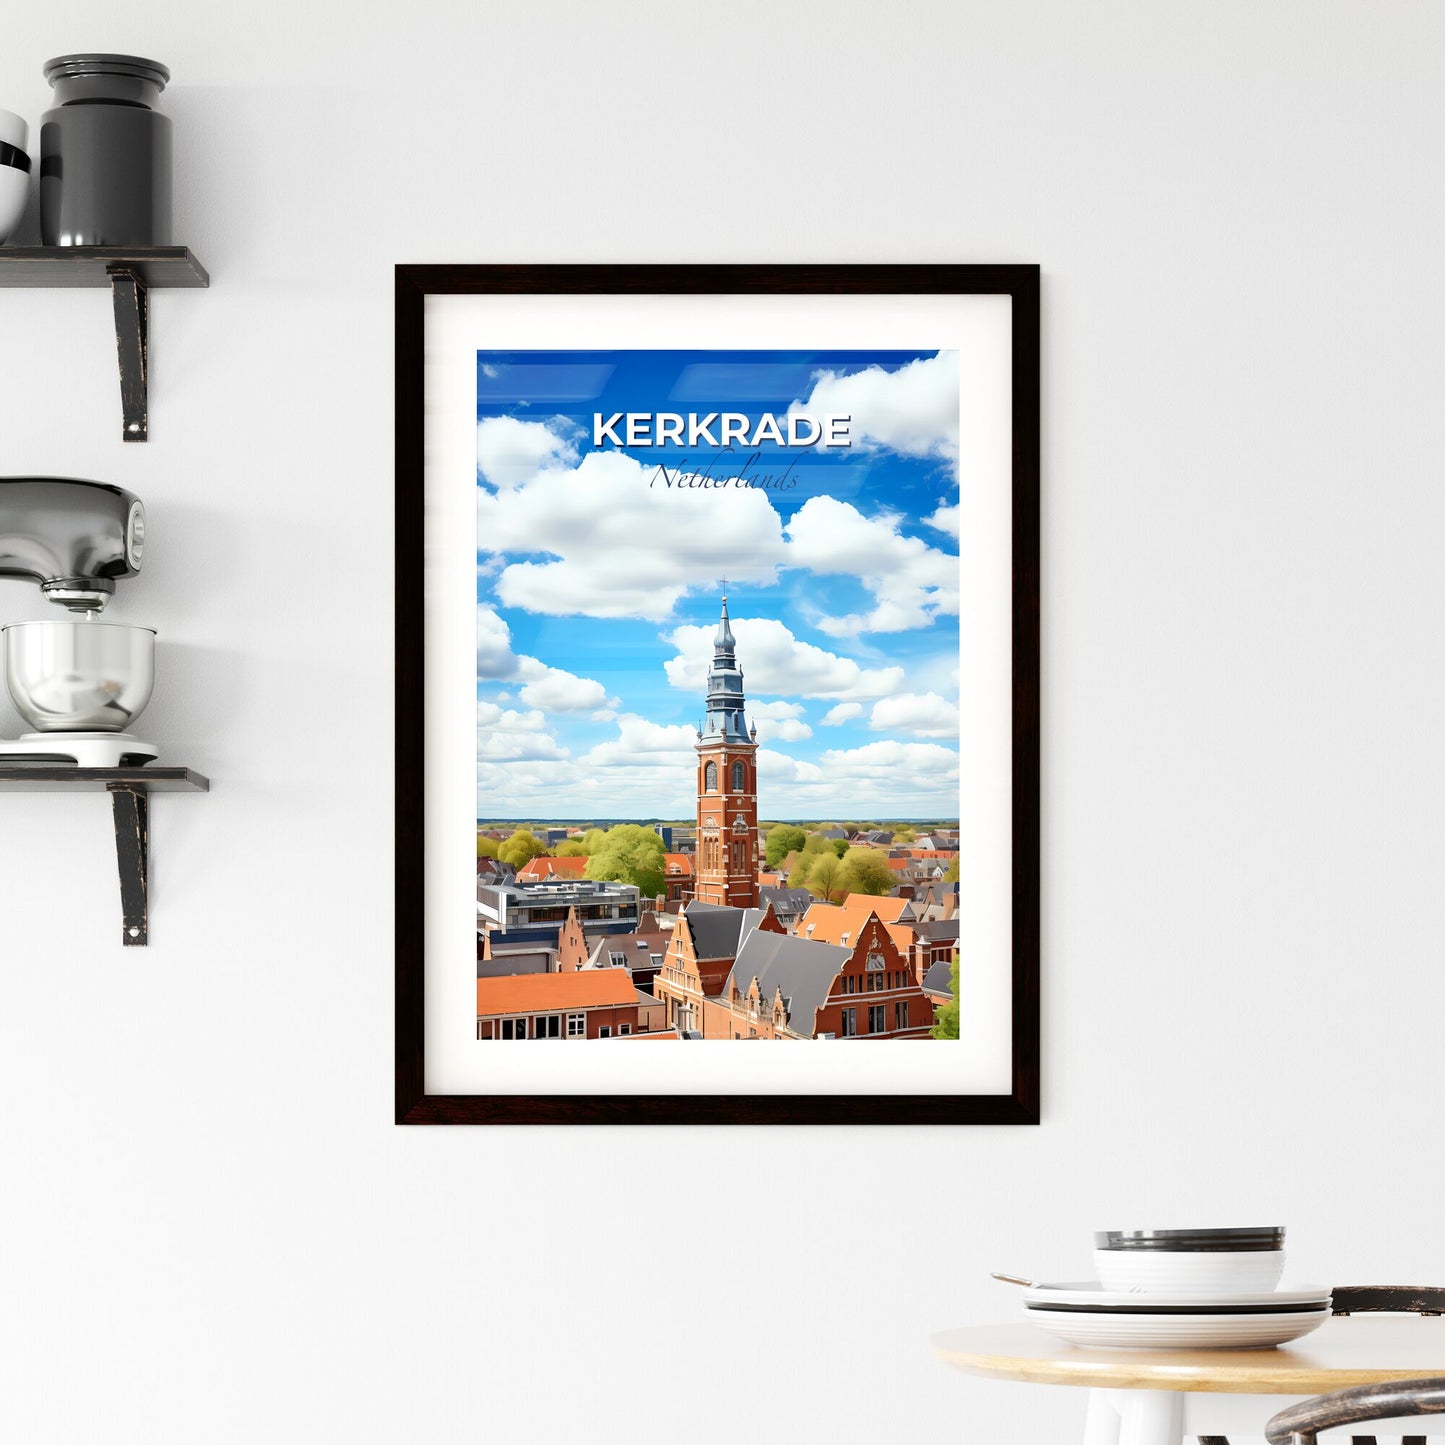 Kerkrade, Netherlands, A Poster of a tower in a city Default Title